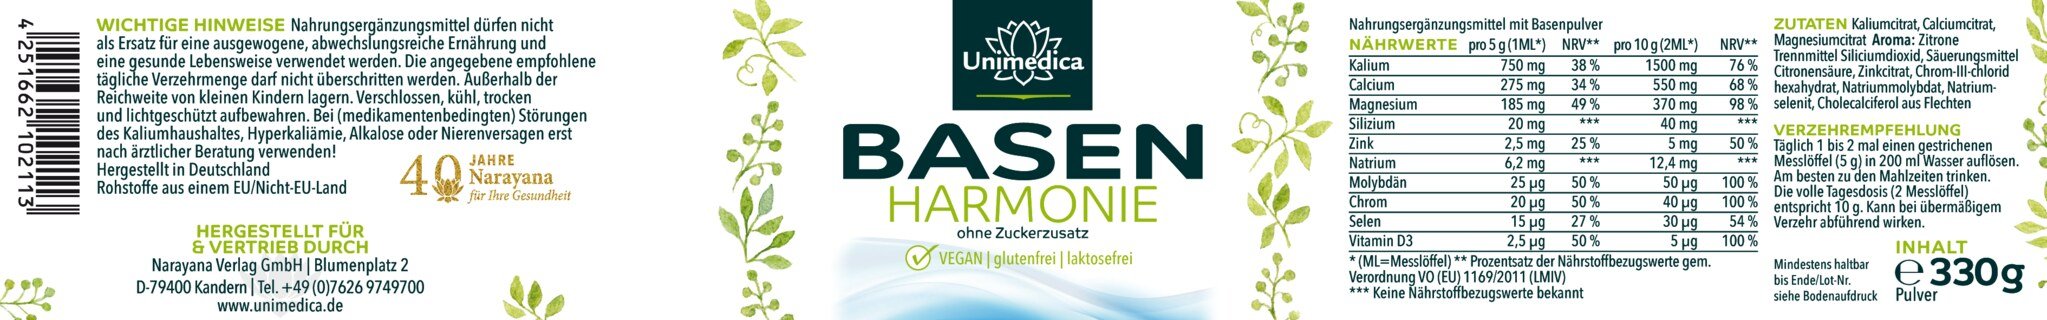 Set: Bases Harmony - 2 x 330g - from Unimedica